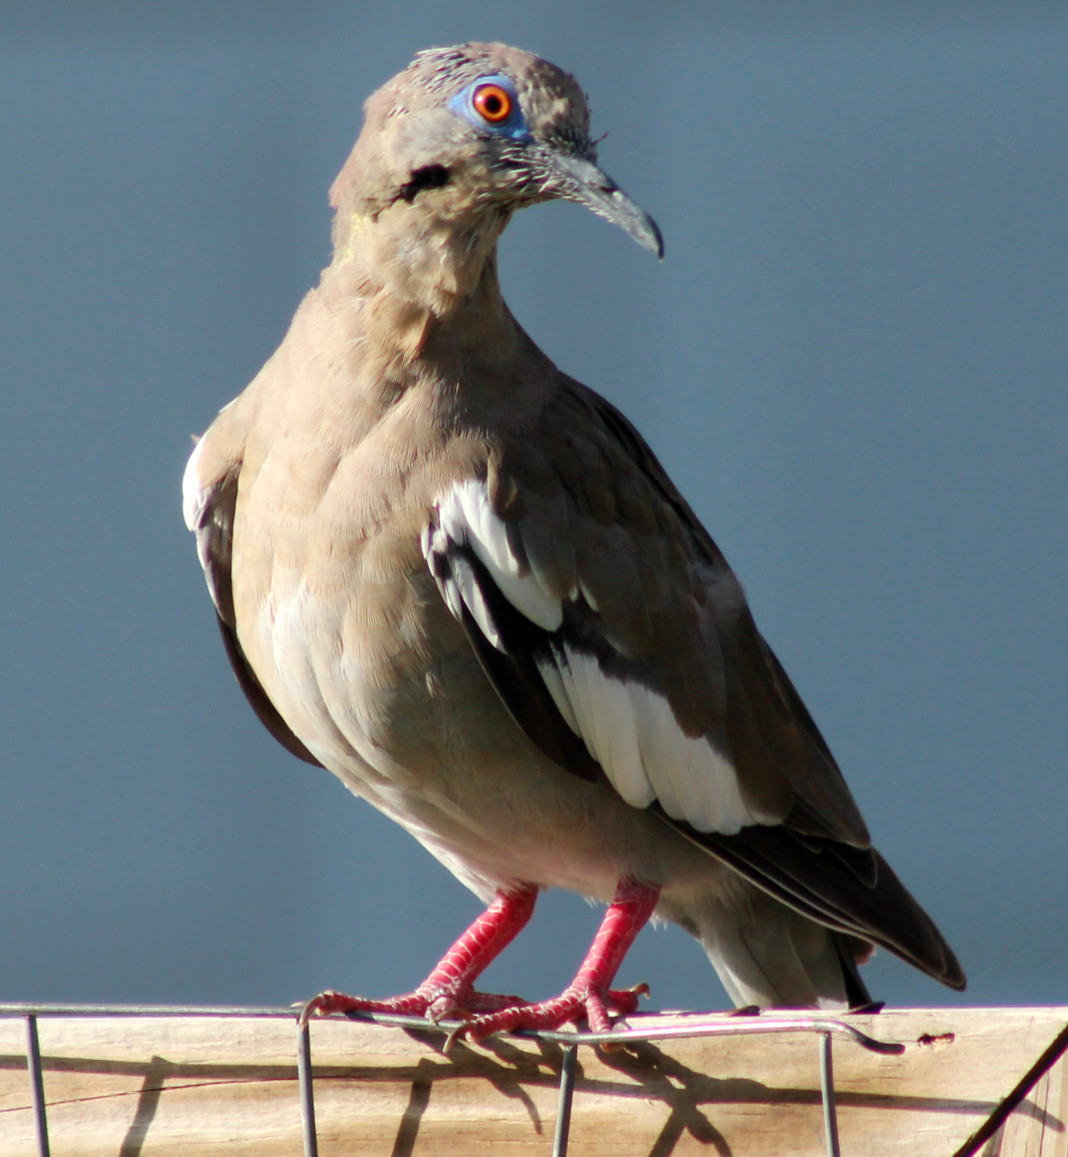 Texas dove hunting holiday 2014 season begins on Labor Day